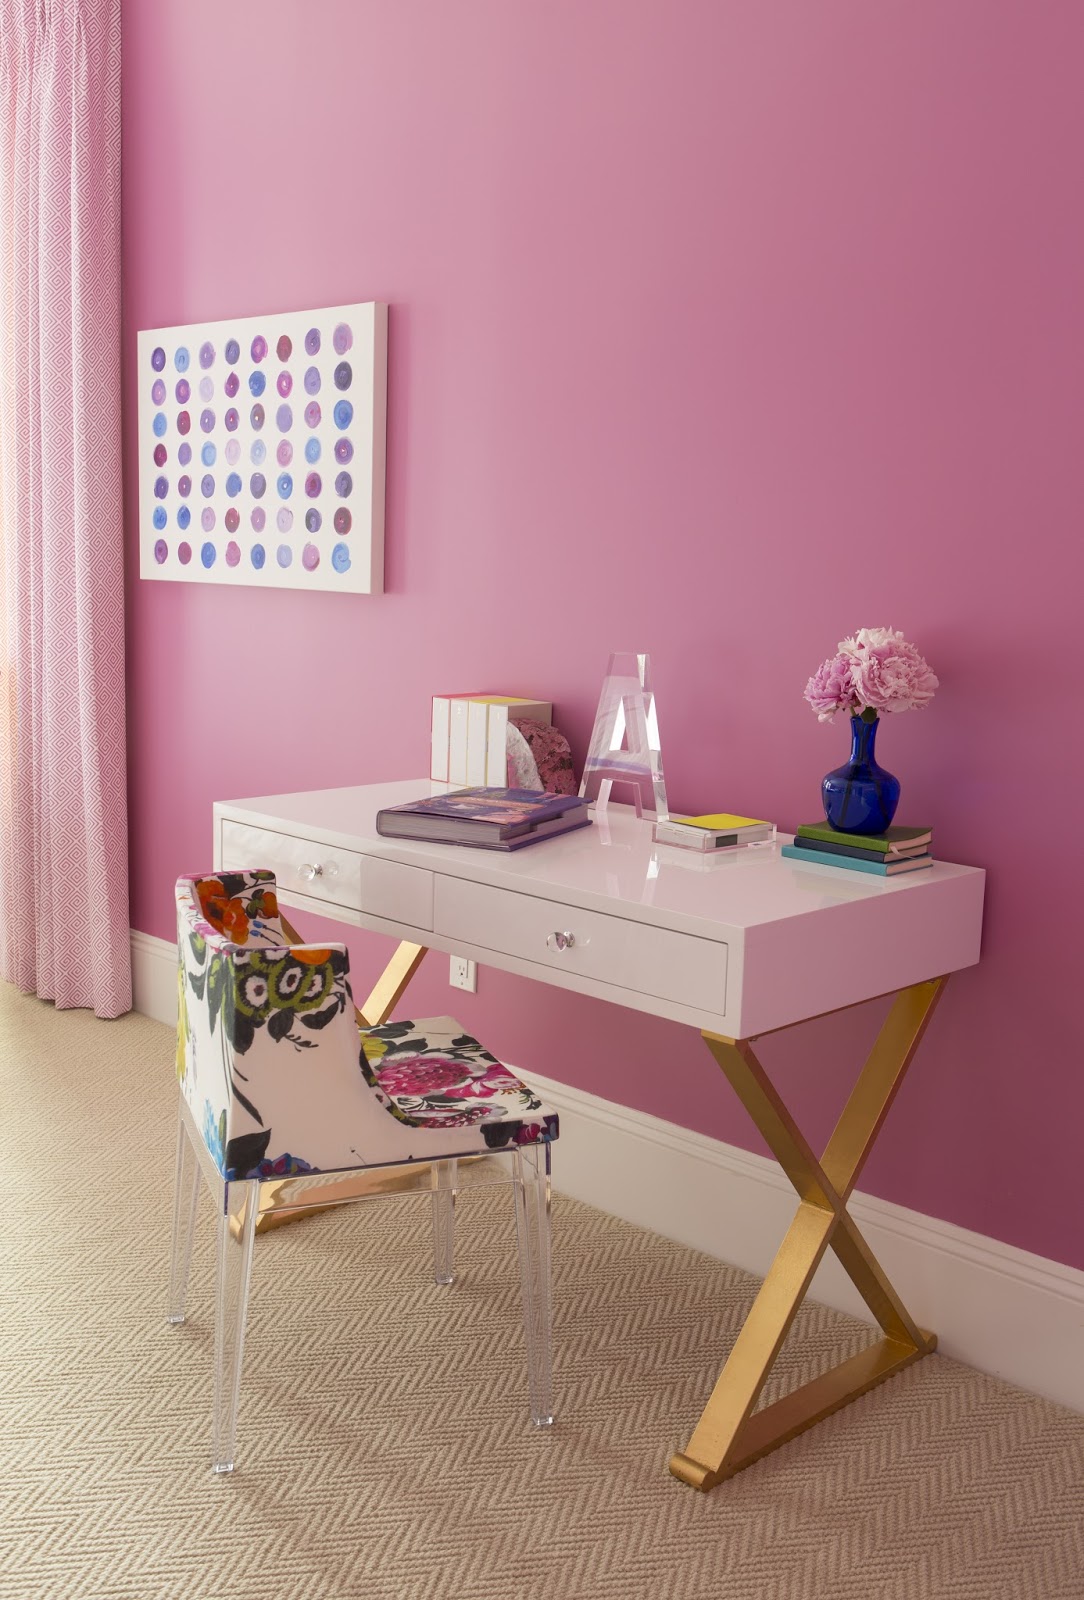 Pretty in Pink: Bedroom Beautiful